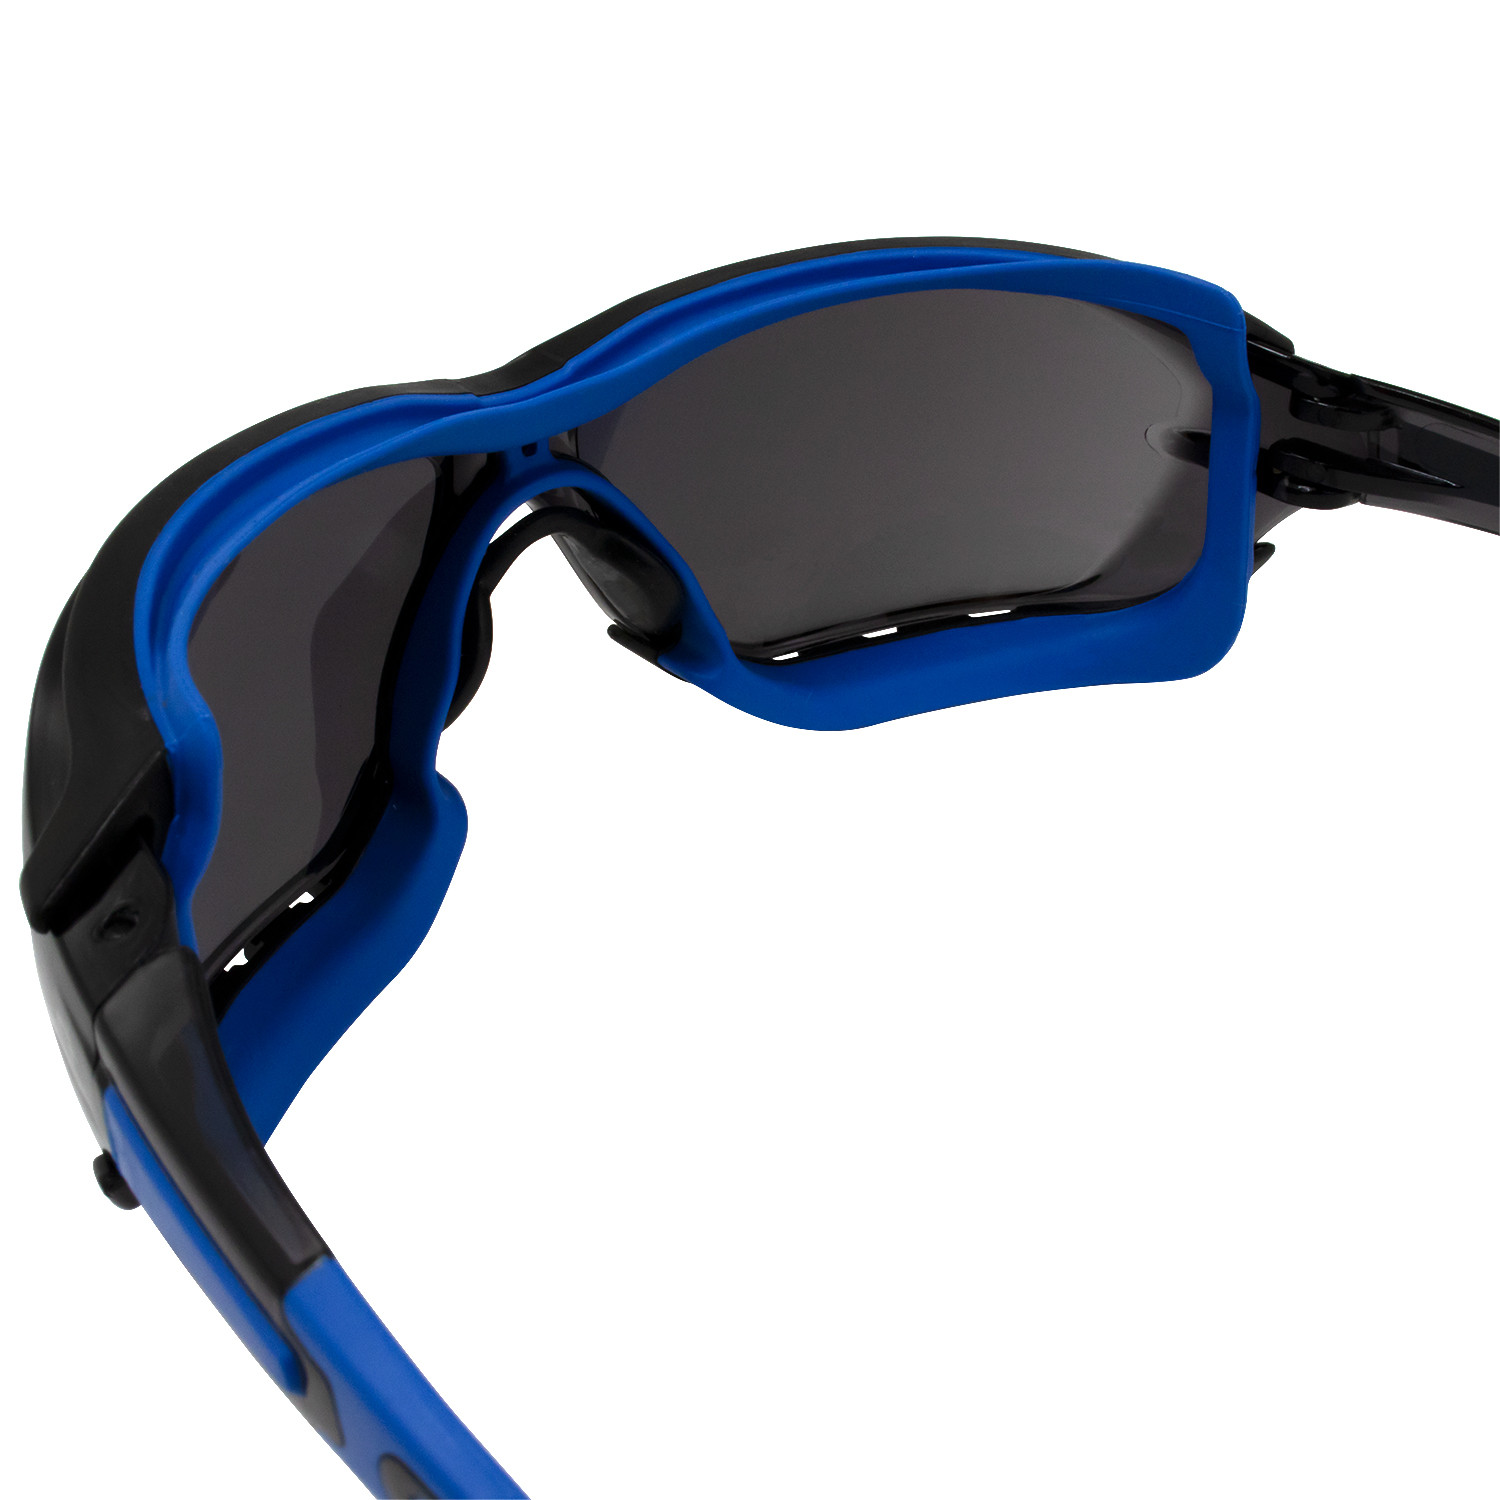 Birdz Eyewear Gasket Safety Padded Motorcycle Sport Sunglasses Blue with Smoke Lens - image 5 of 7